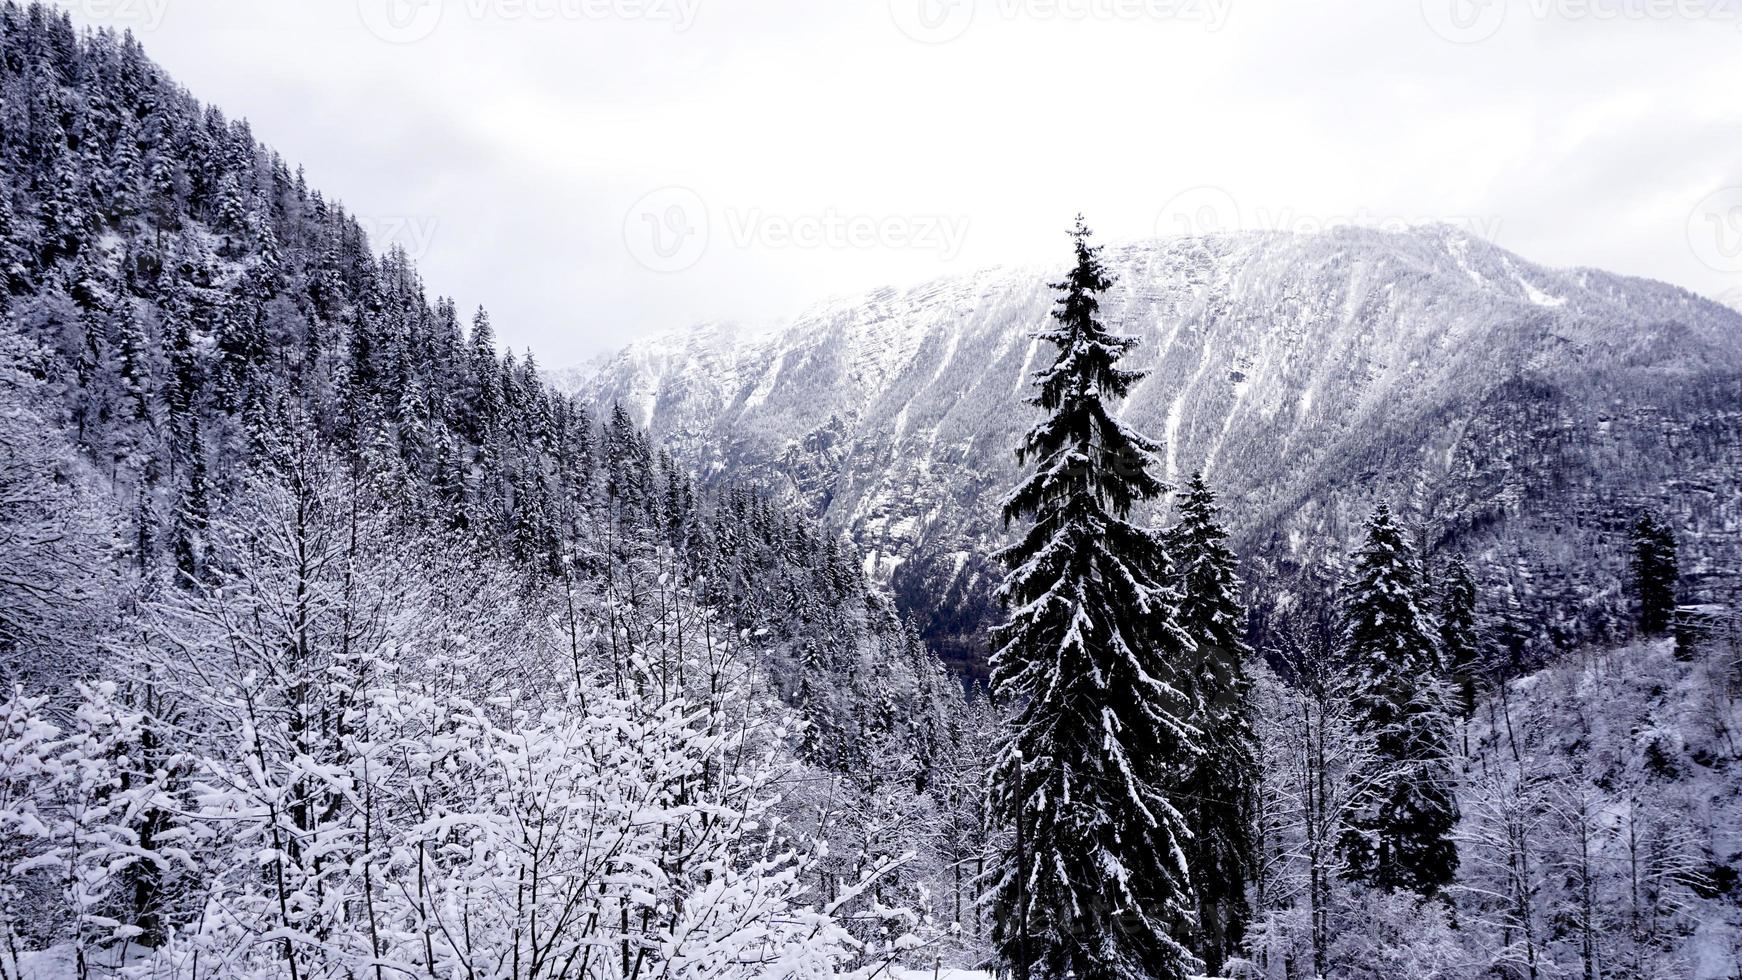 Scenery of forest valley dreamscape Hallstatt winter snow mountain landscape leads to the old salt mine of Hallstatt, Austria photo